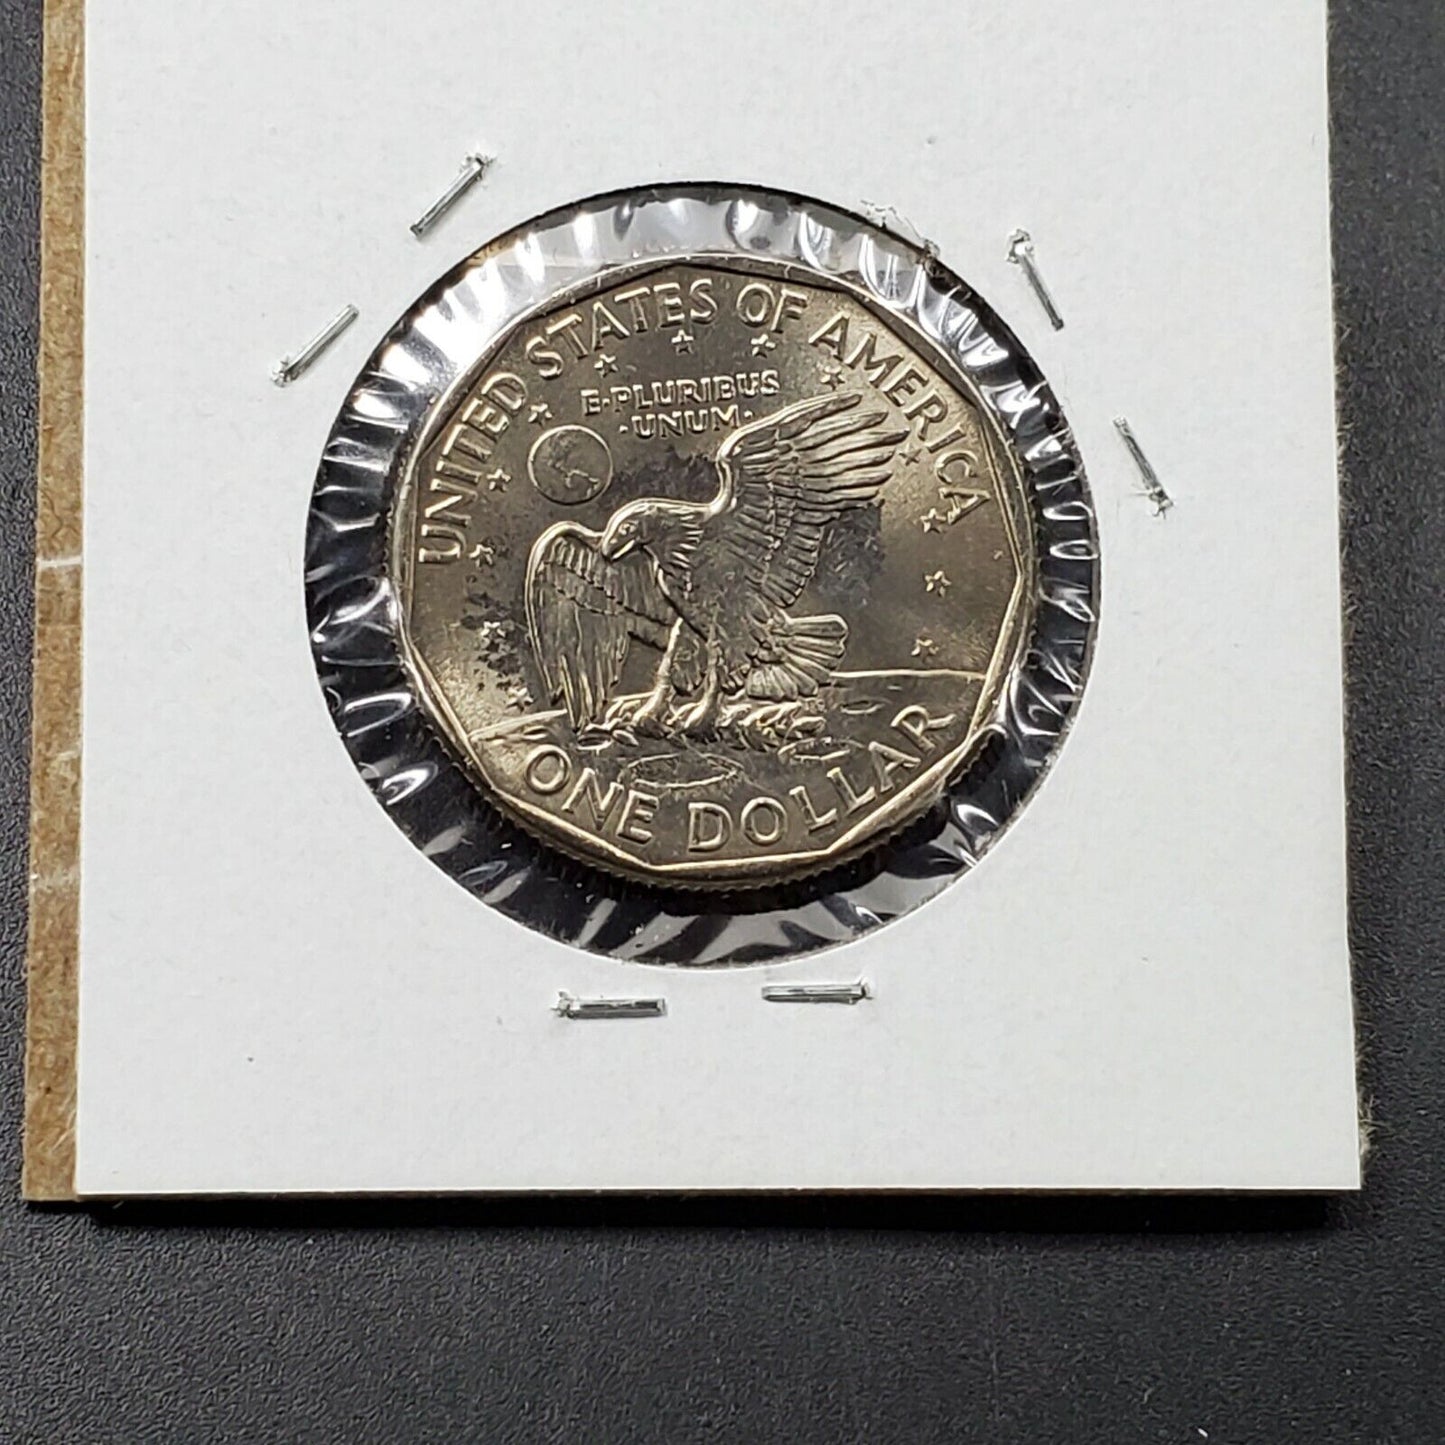 1999 P SBA $1 Susan B Anthony Small Size Dollar Coin Gem BU Uncirculated